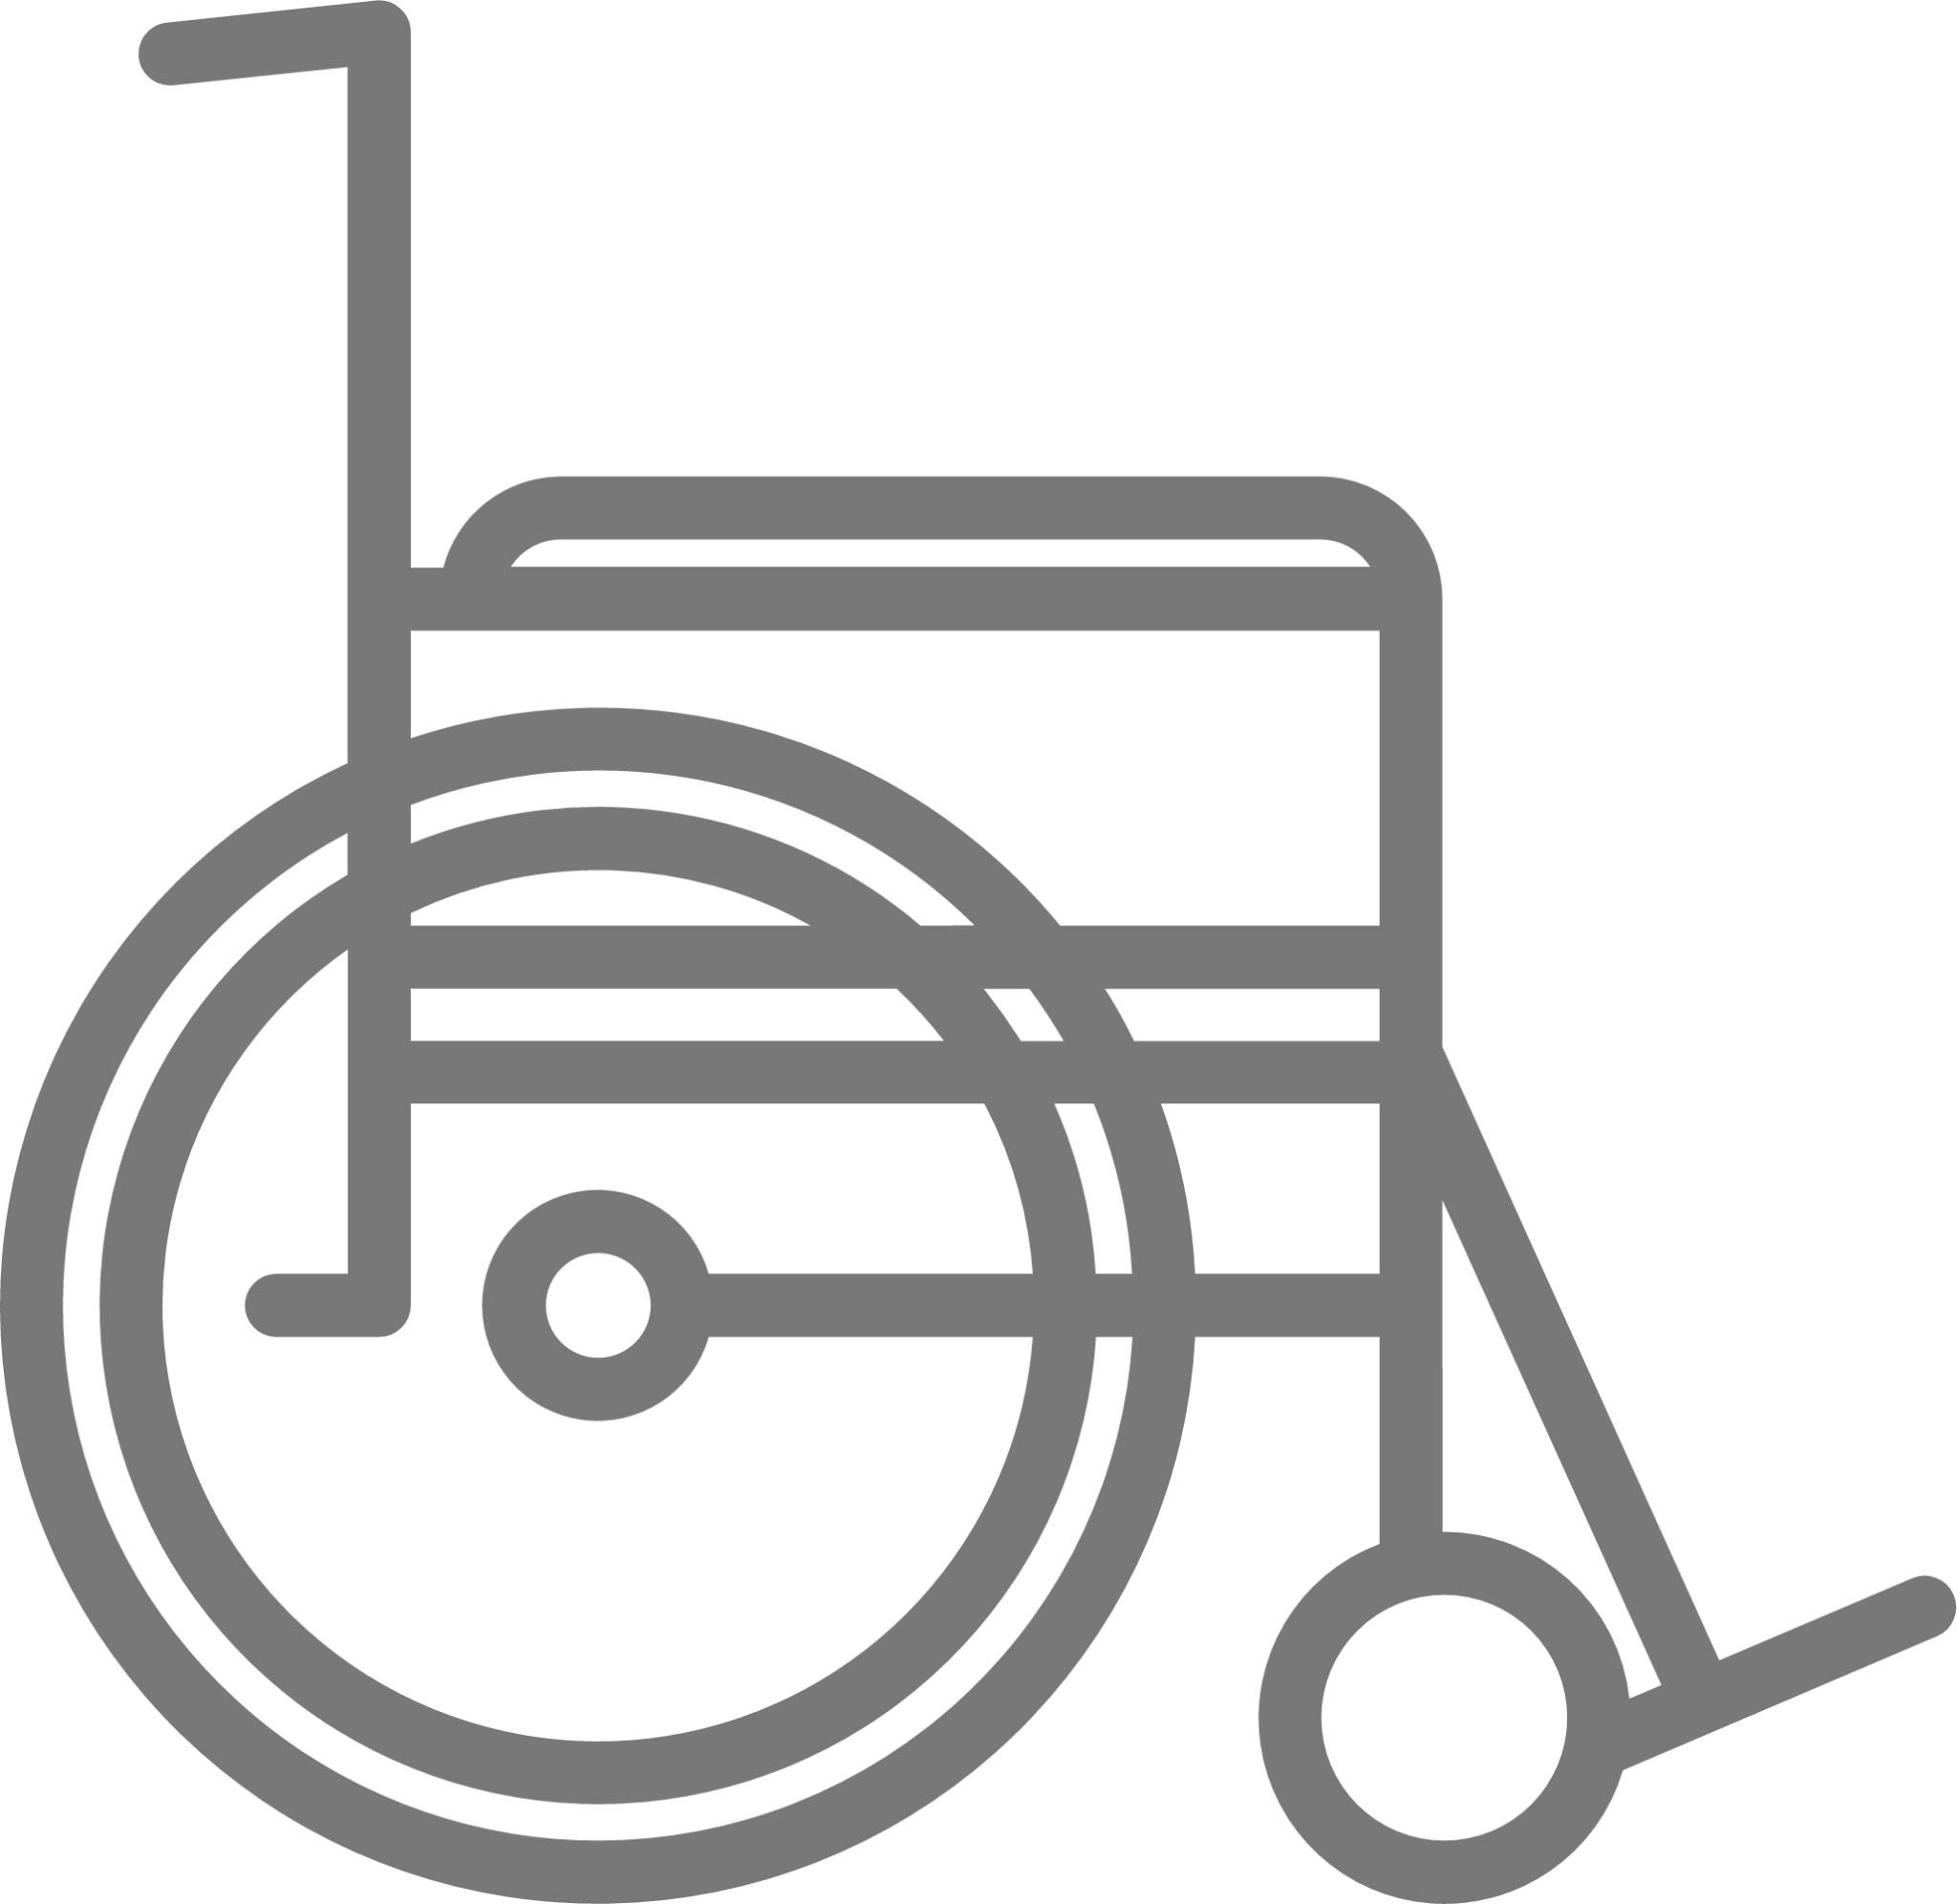 disease elderly hospital wheelchair illustration